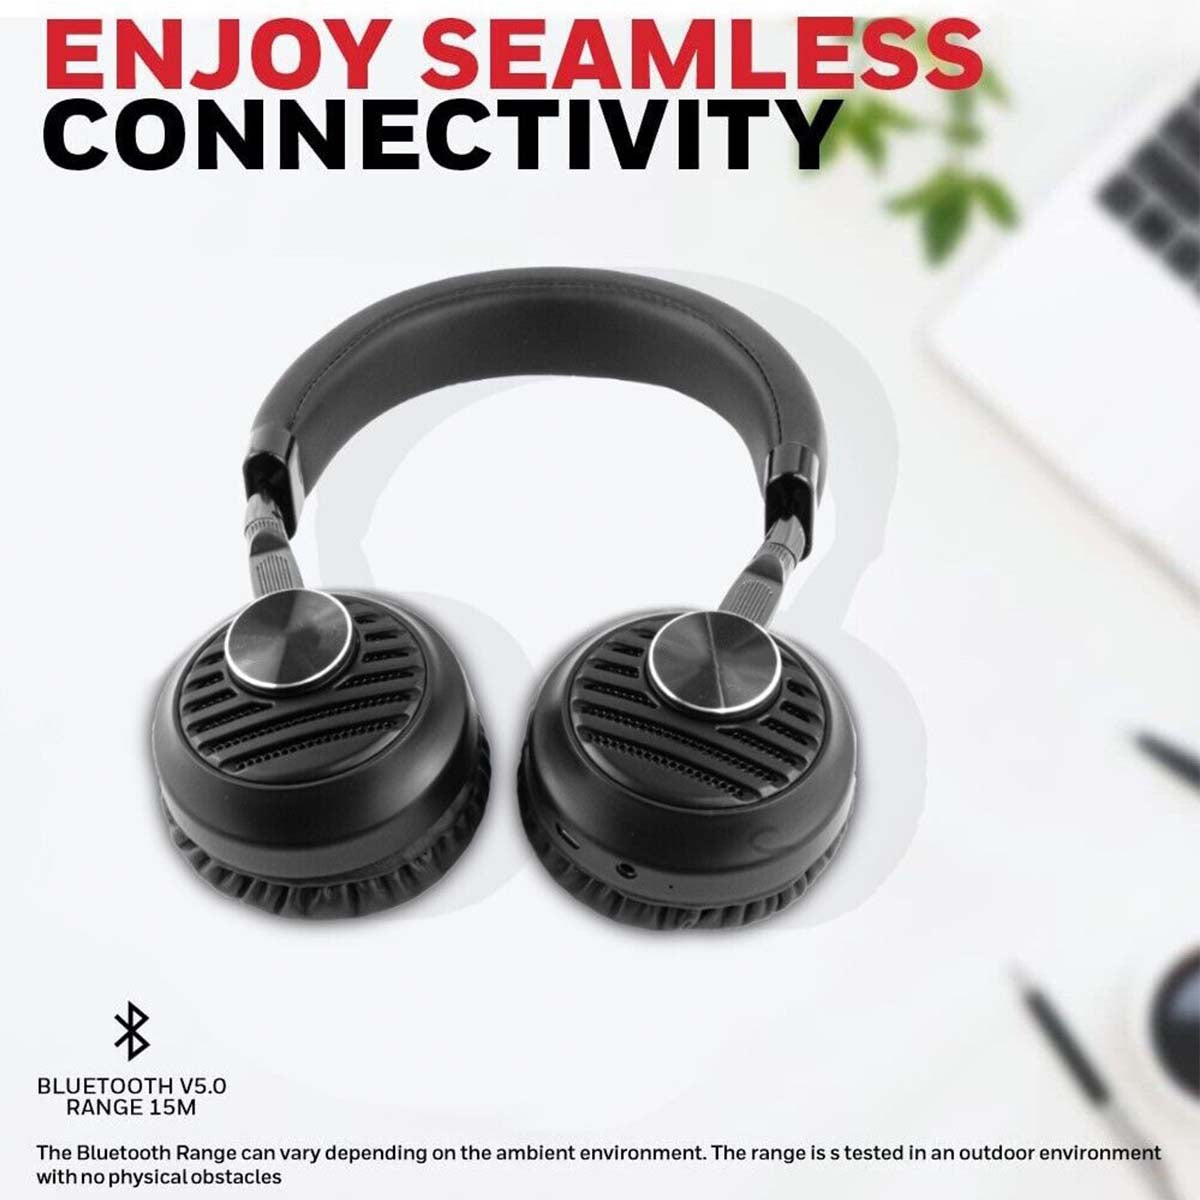 EARLDOM Bluetooth-Headset, kabellose Bluetooth-Kopfhörer, Stereo-Kopfhörer mit Mikrofon, kabellose Musik-Kopfhörer